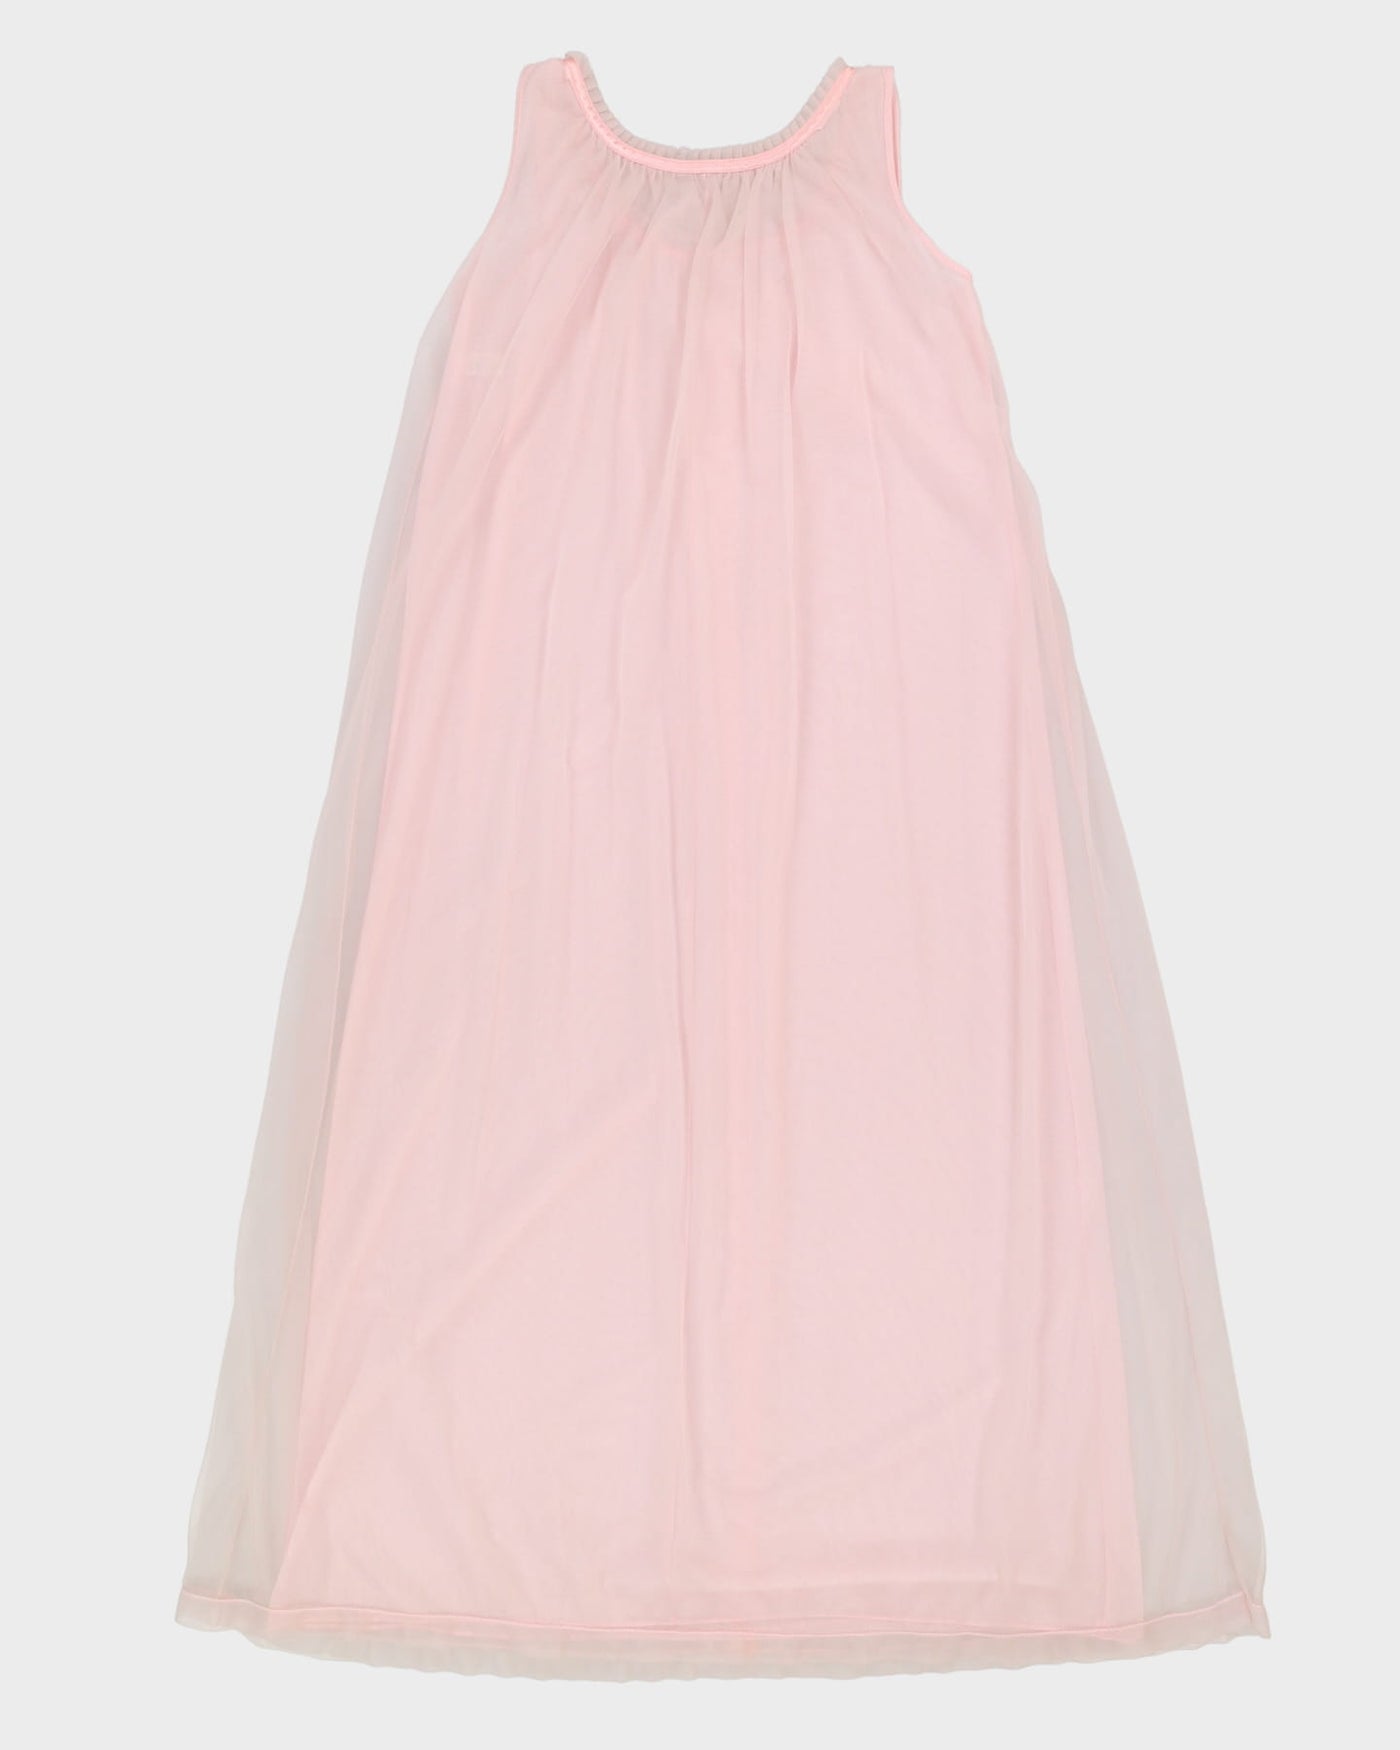 1960s pink layered slip dress - M